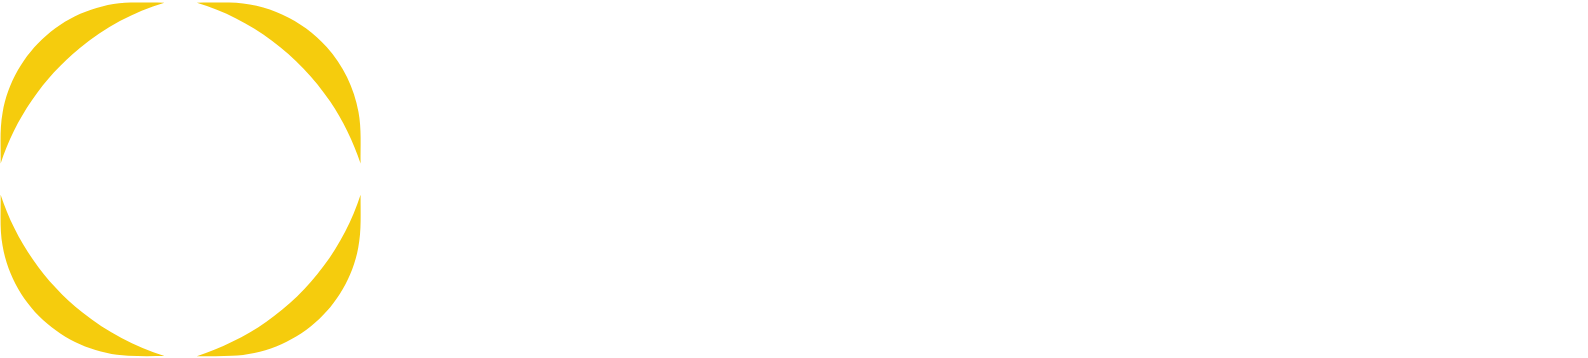 Privia Health Group logo grand pour les fonds sombres (PNG transparent)